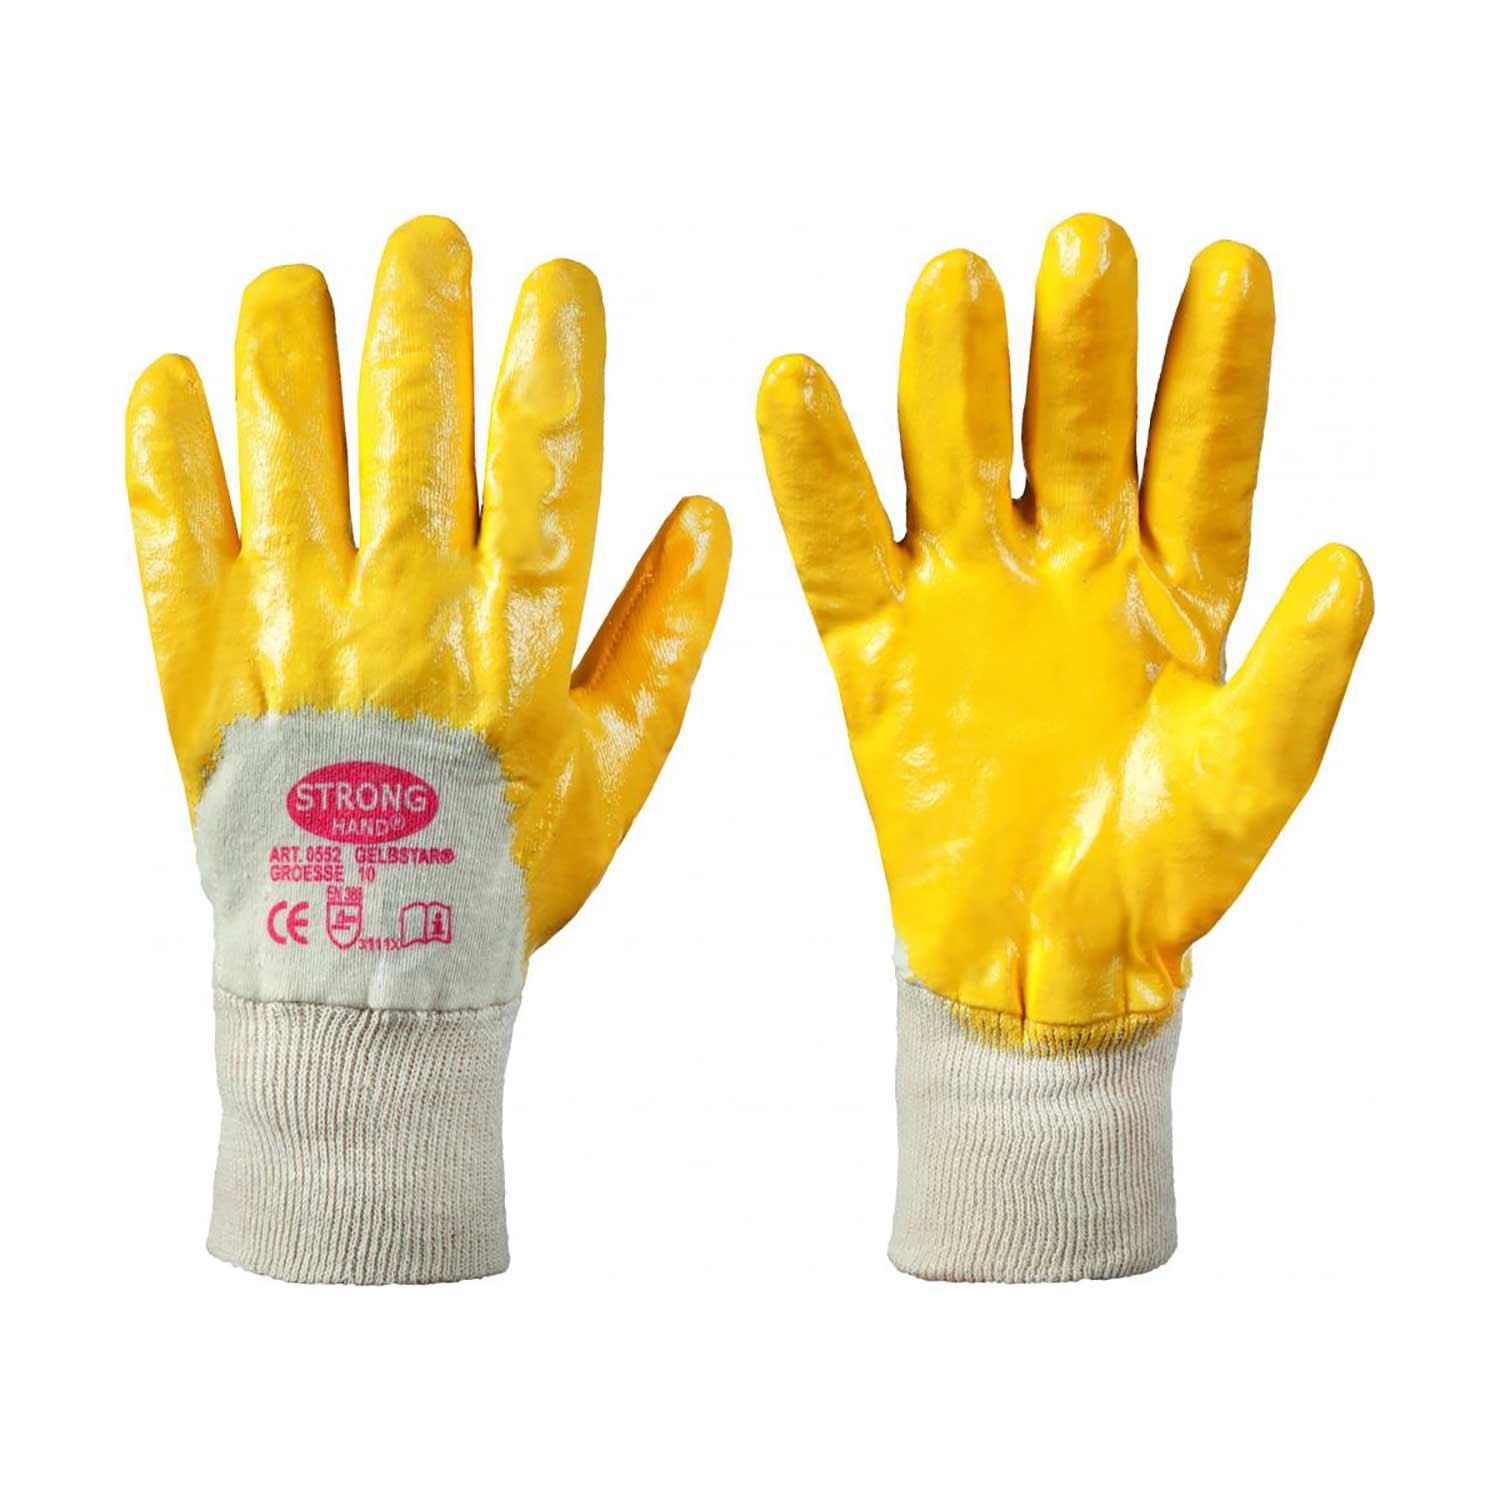 Gelbstar Stronghand Nitril Handschuh Gr. 8